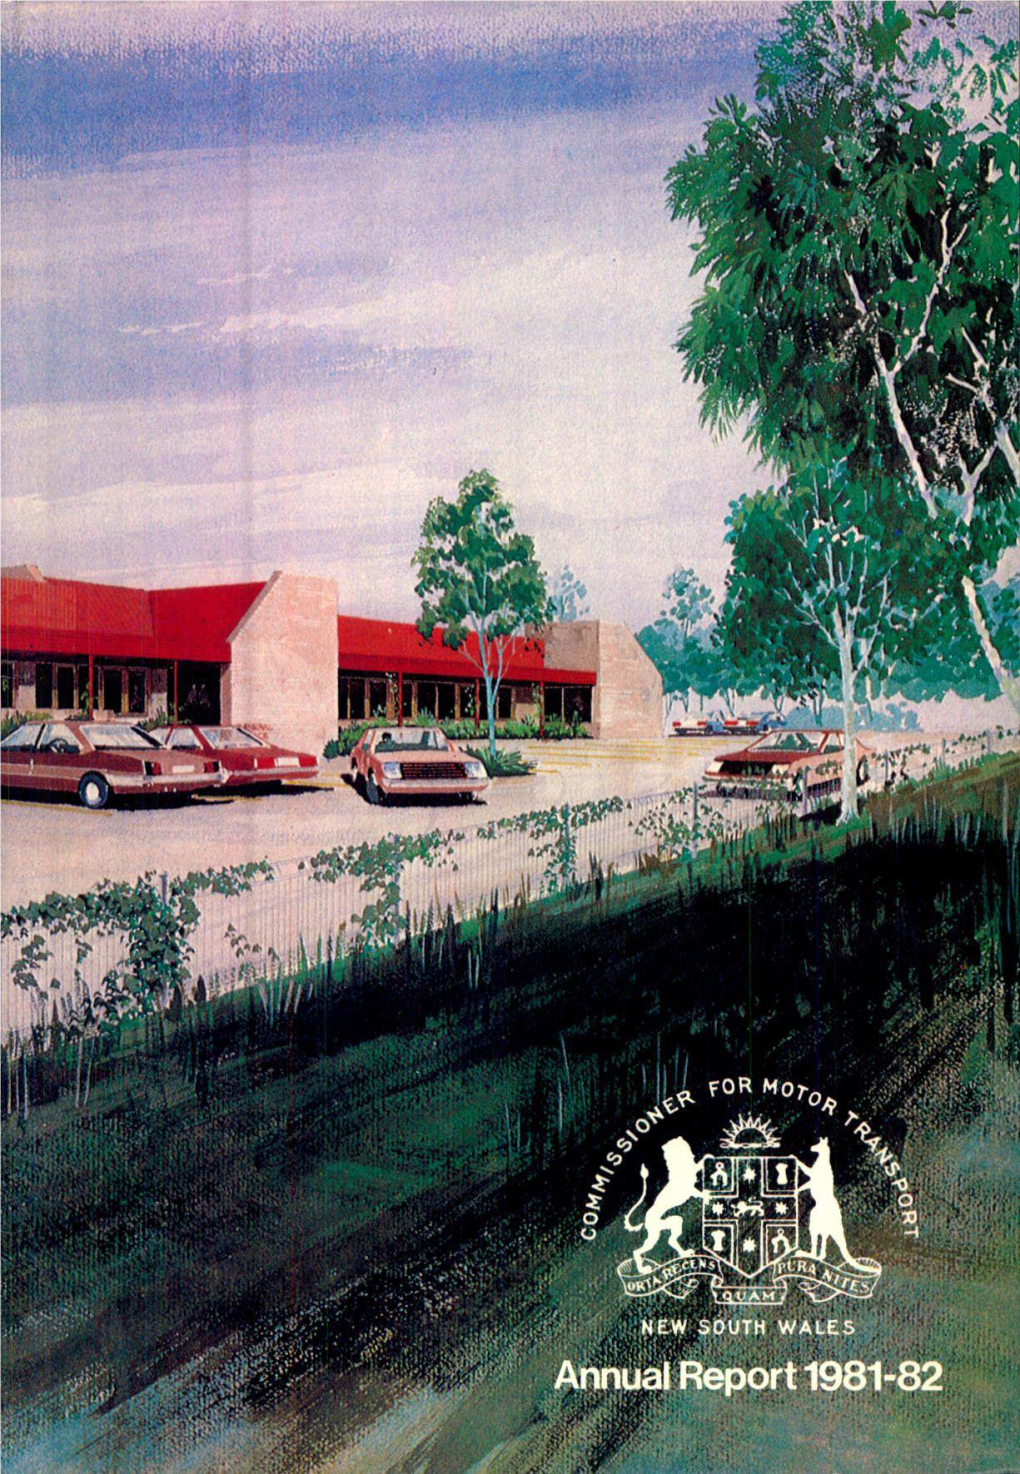 Department of Motor Transport, 1981-82